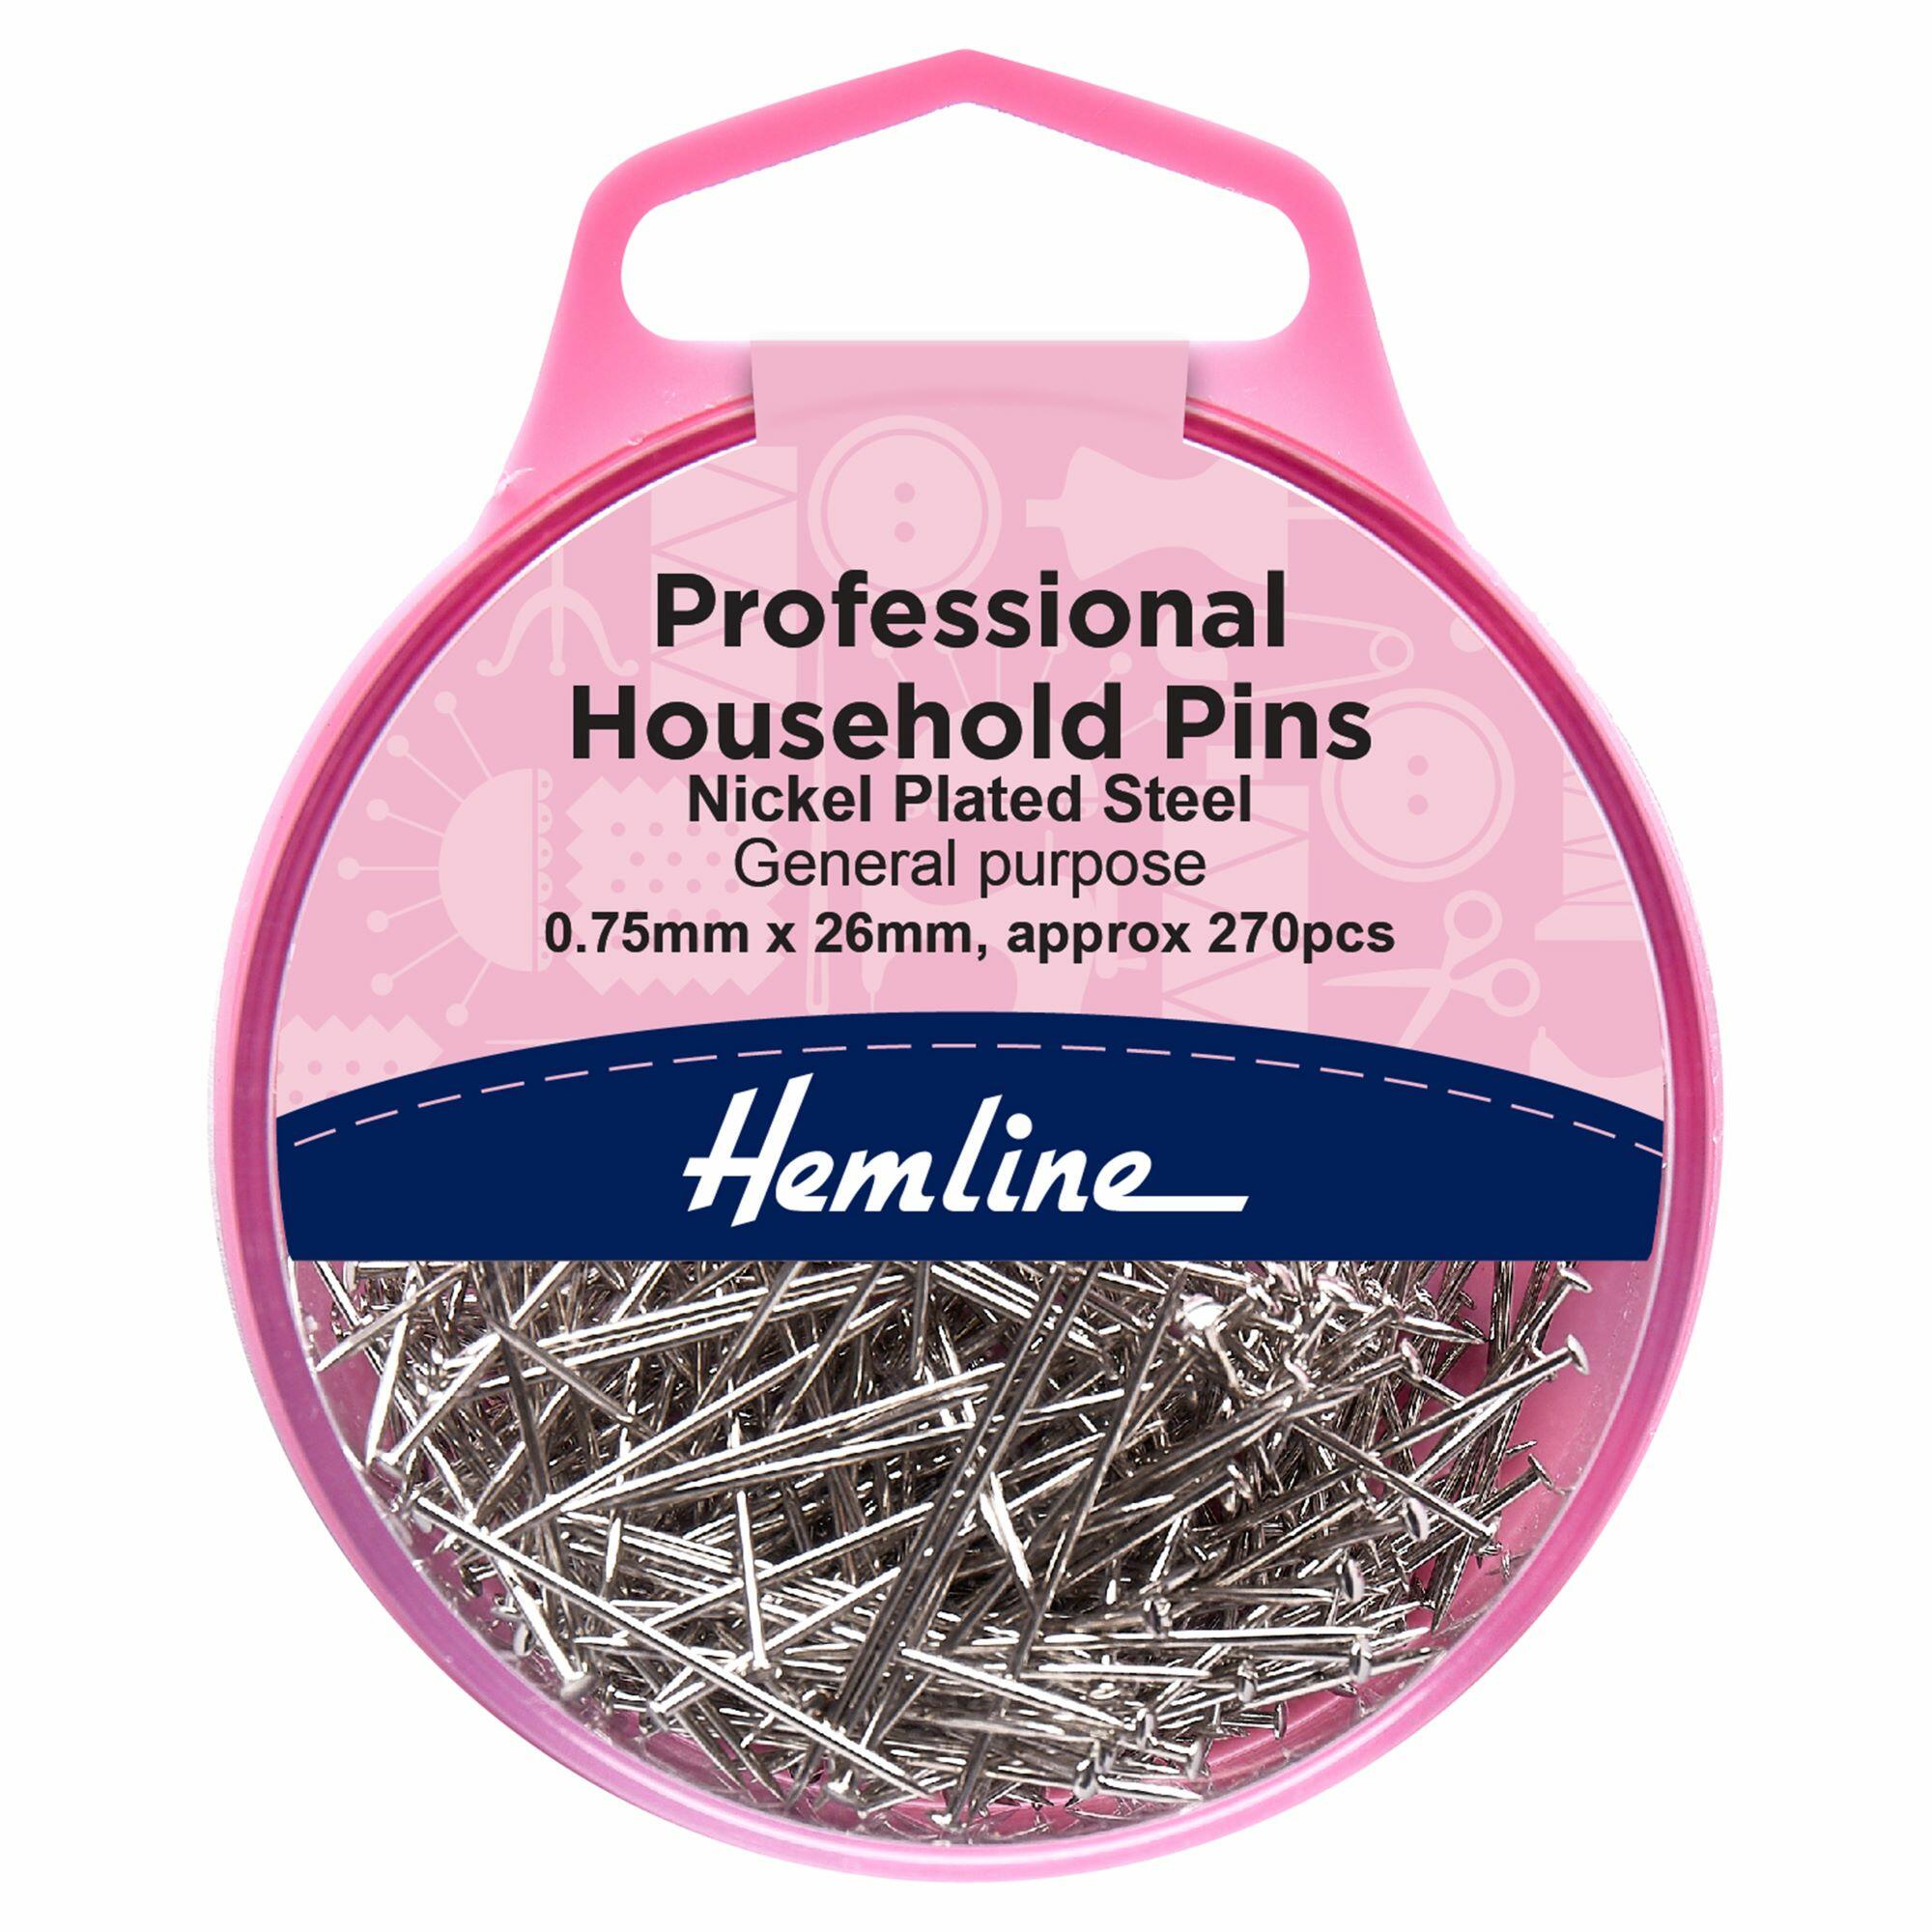 Pink Hemline plastic storage pot containing general purpose steel pins